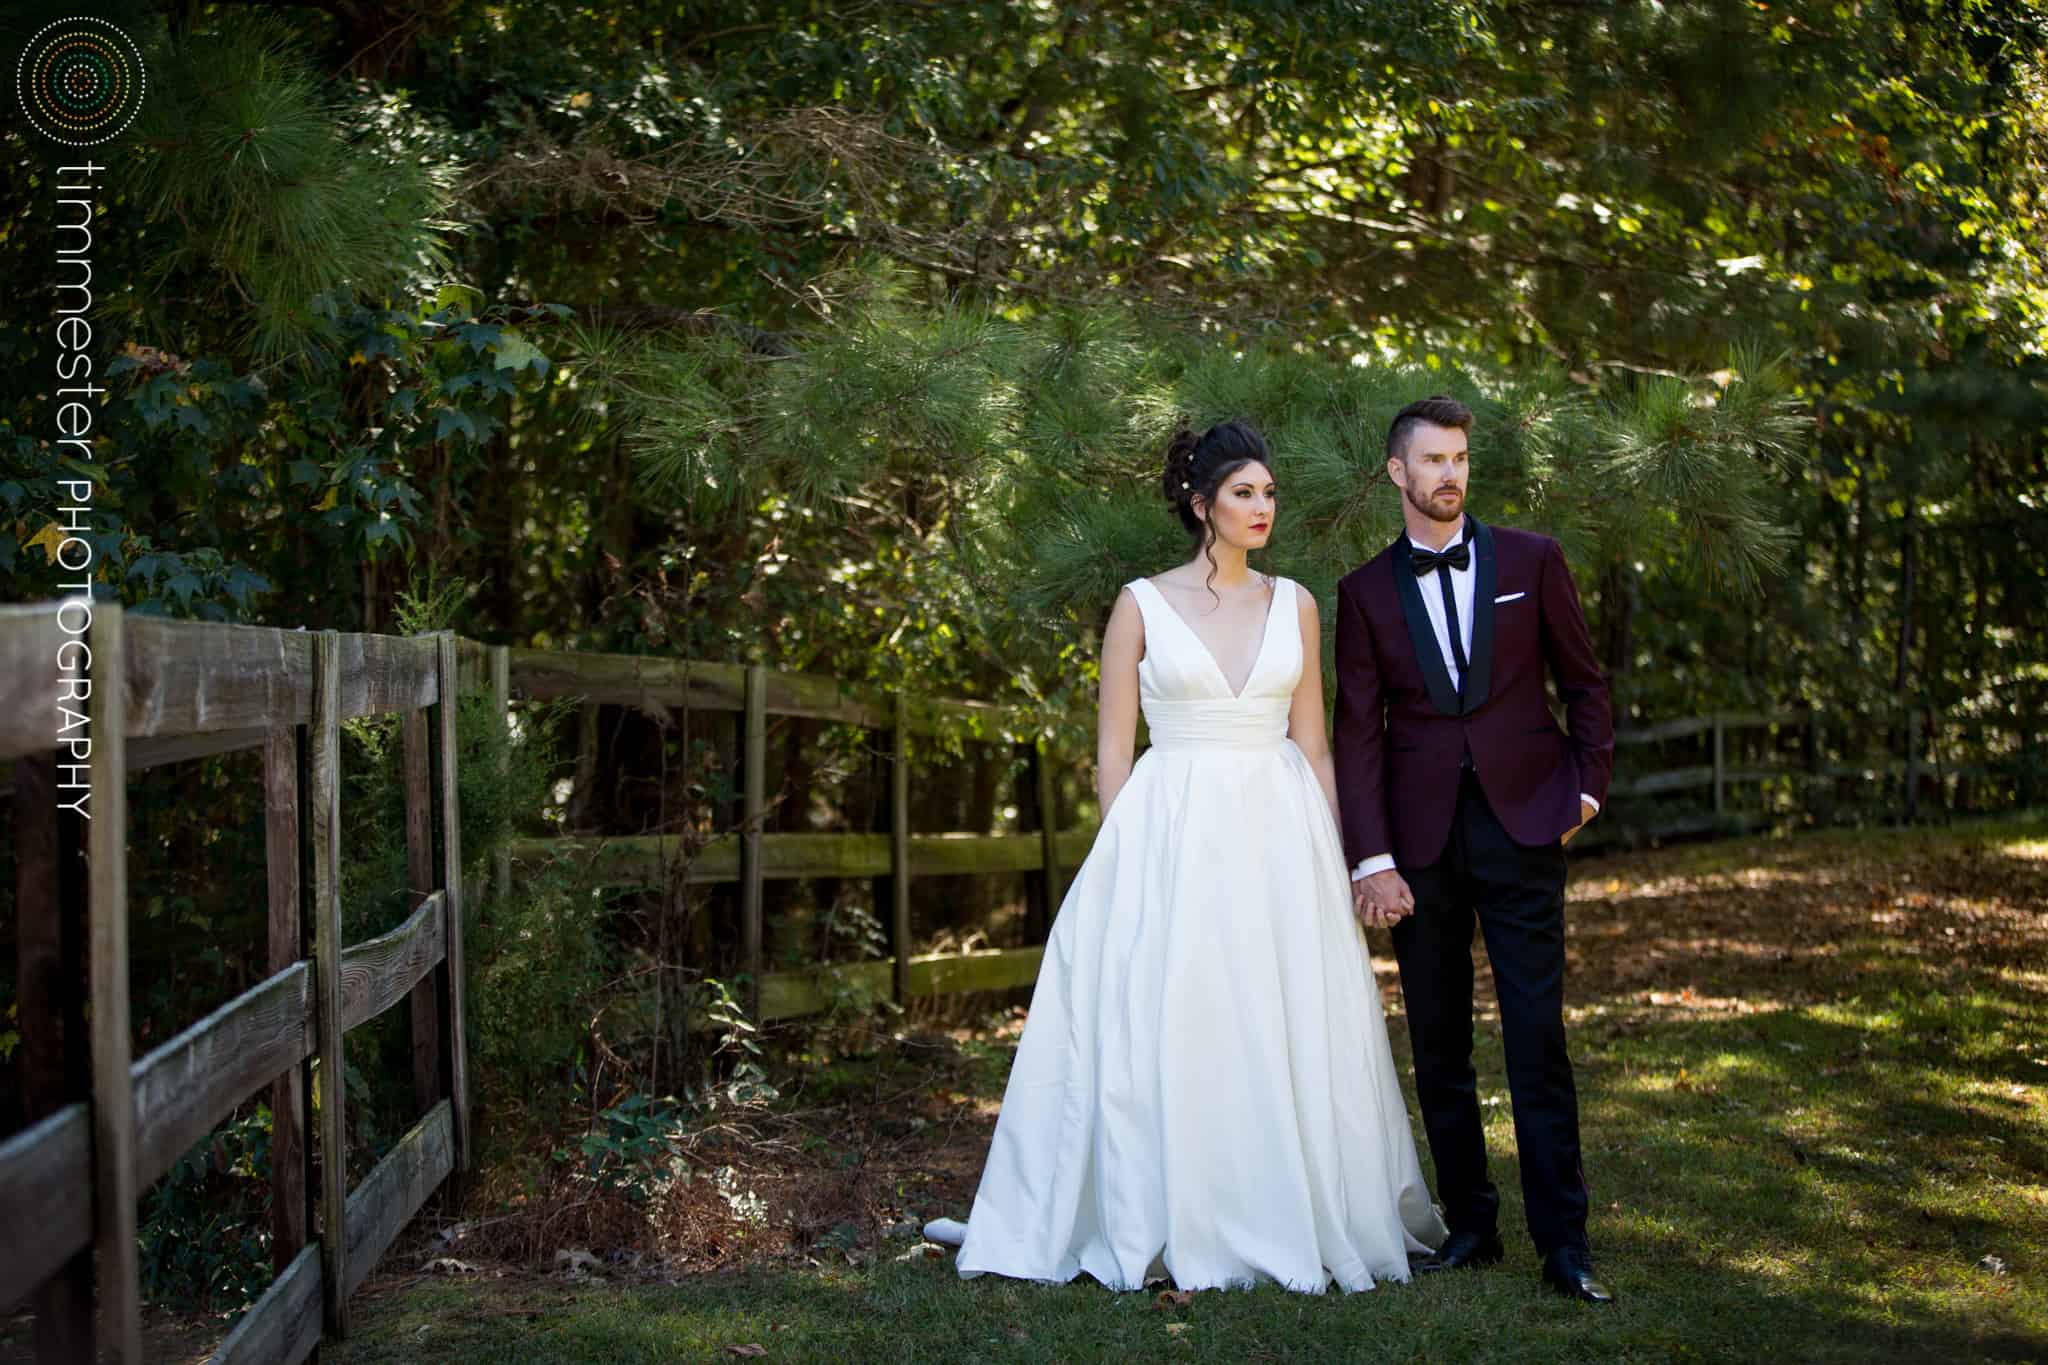 Bride and Groom wearing wedding dress and custom suit